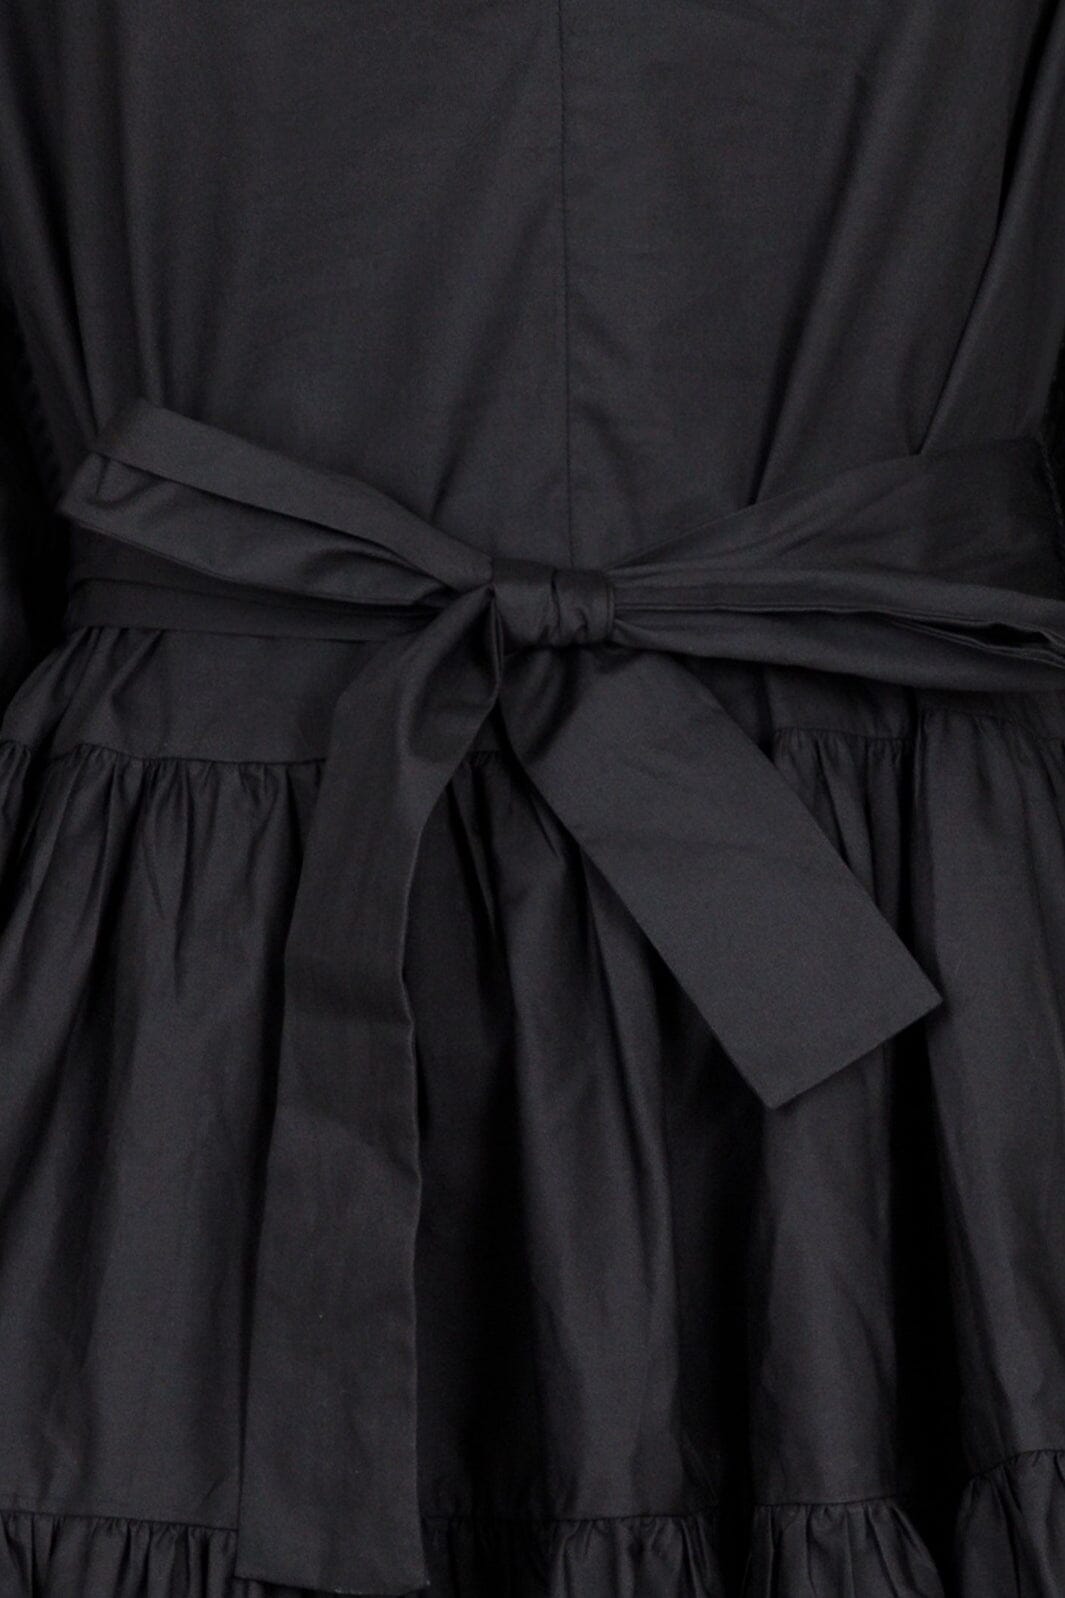 Neo Noir - Debbie Poplin Dress - Black Kjoler 